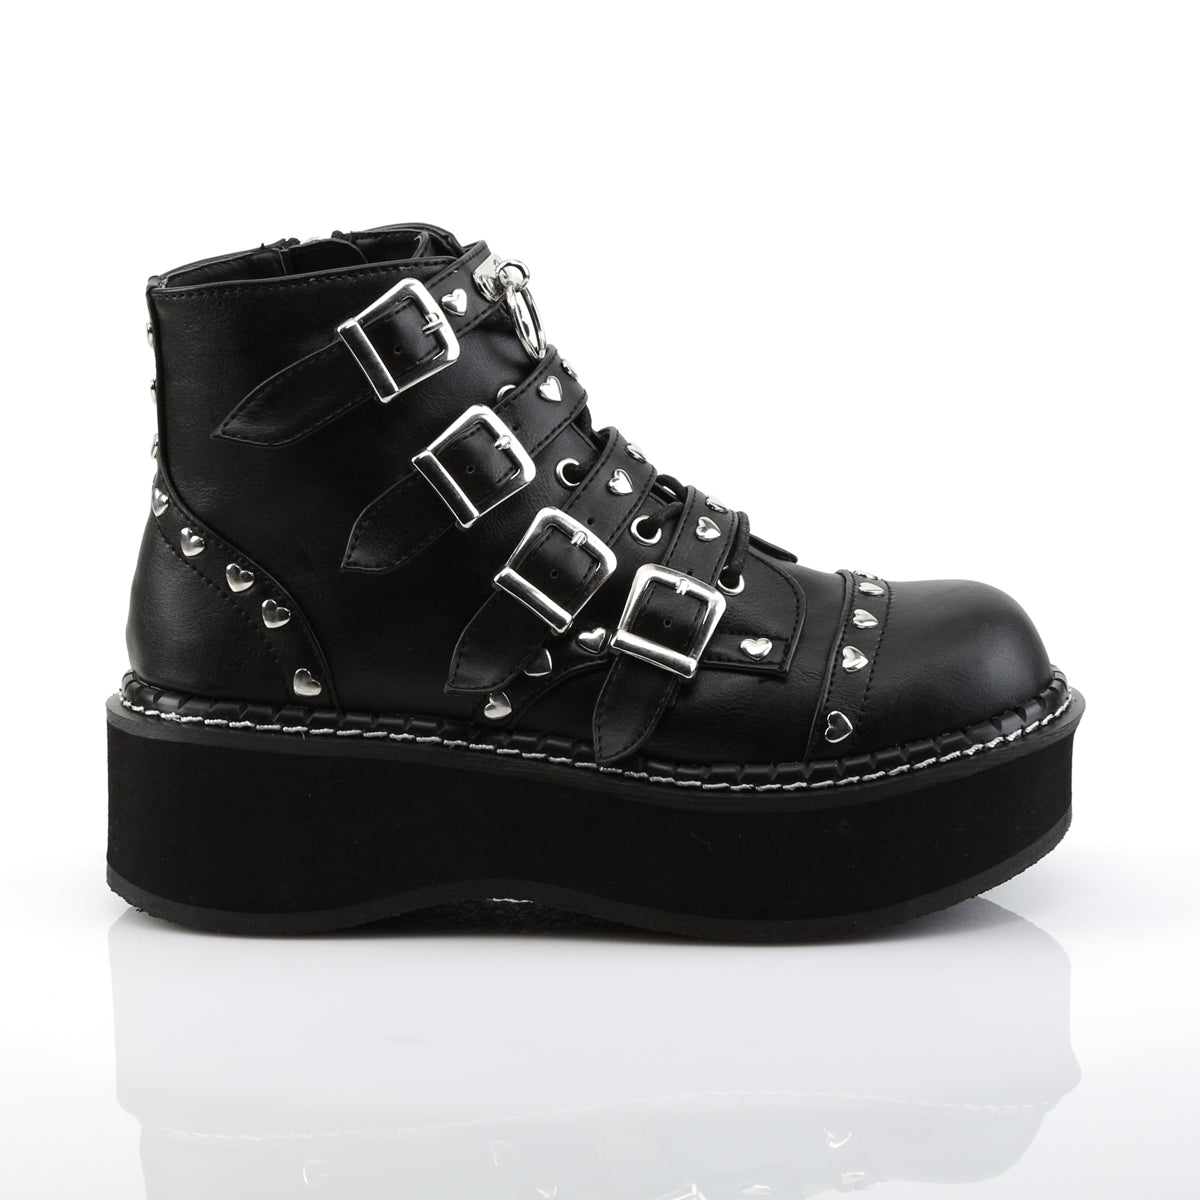 EMILY-315 Demonia Black Vegan Leather Women's Ankle Boots [Demonia Cult Alternative Footwear]